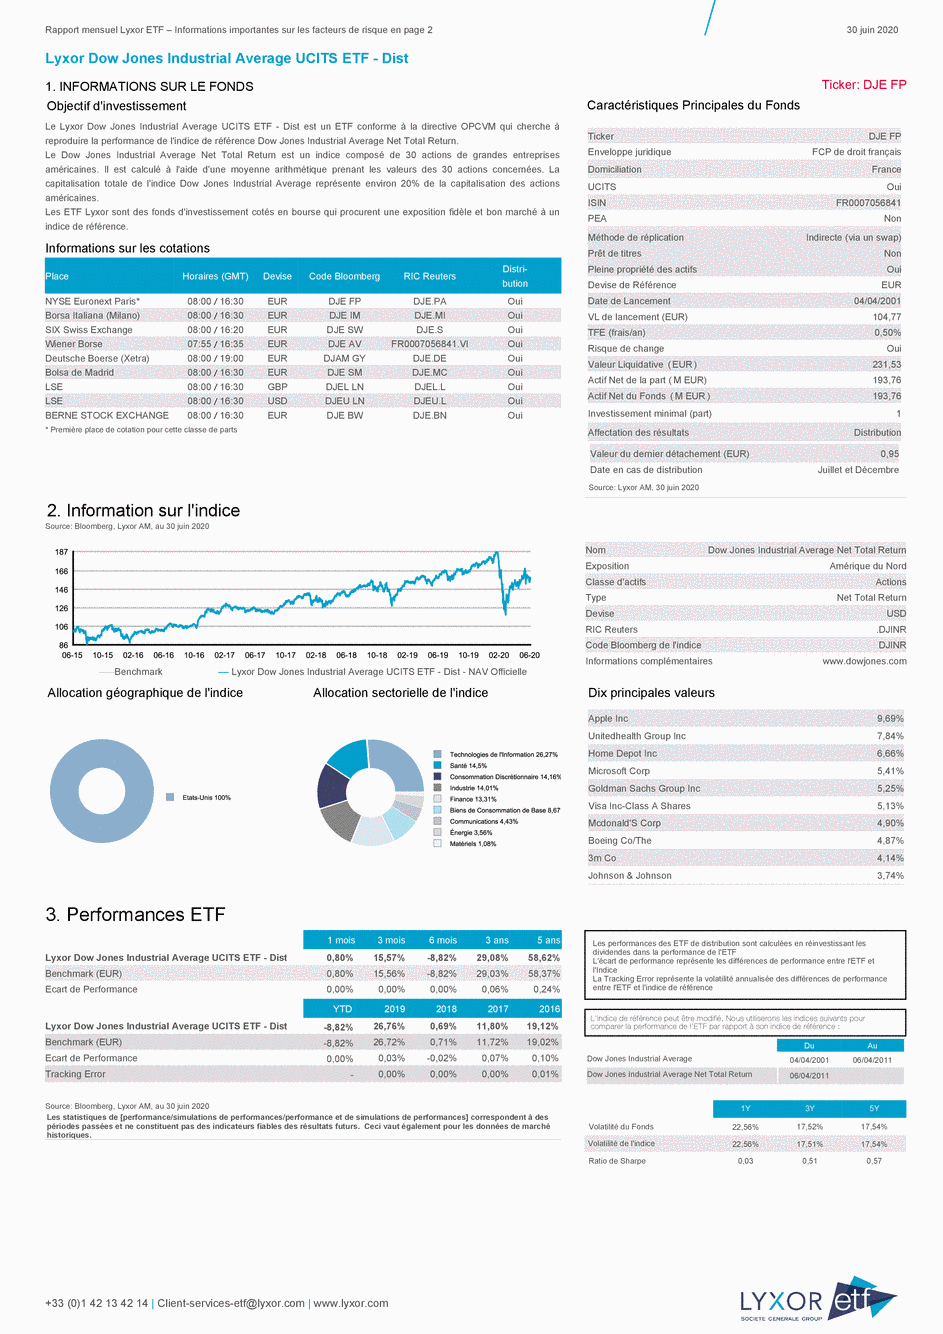 Reporting Lyxor Dow Jones Industrial Average UCITS ETF - Dist - 30/06/2020 - Français